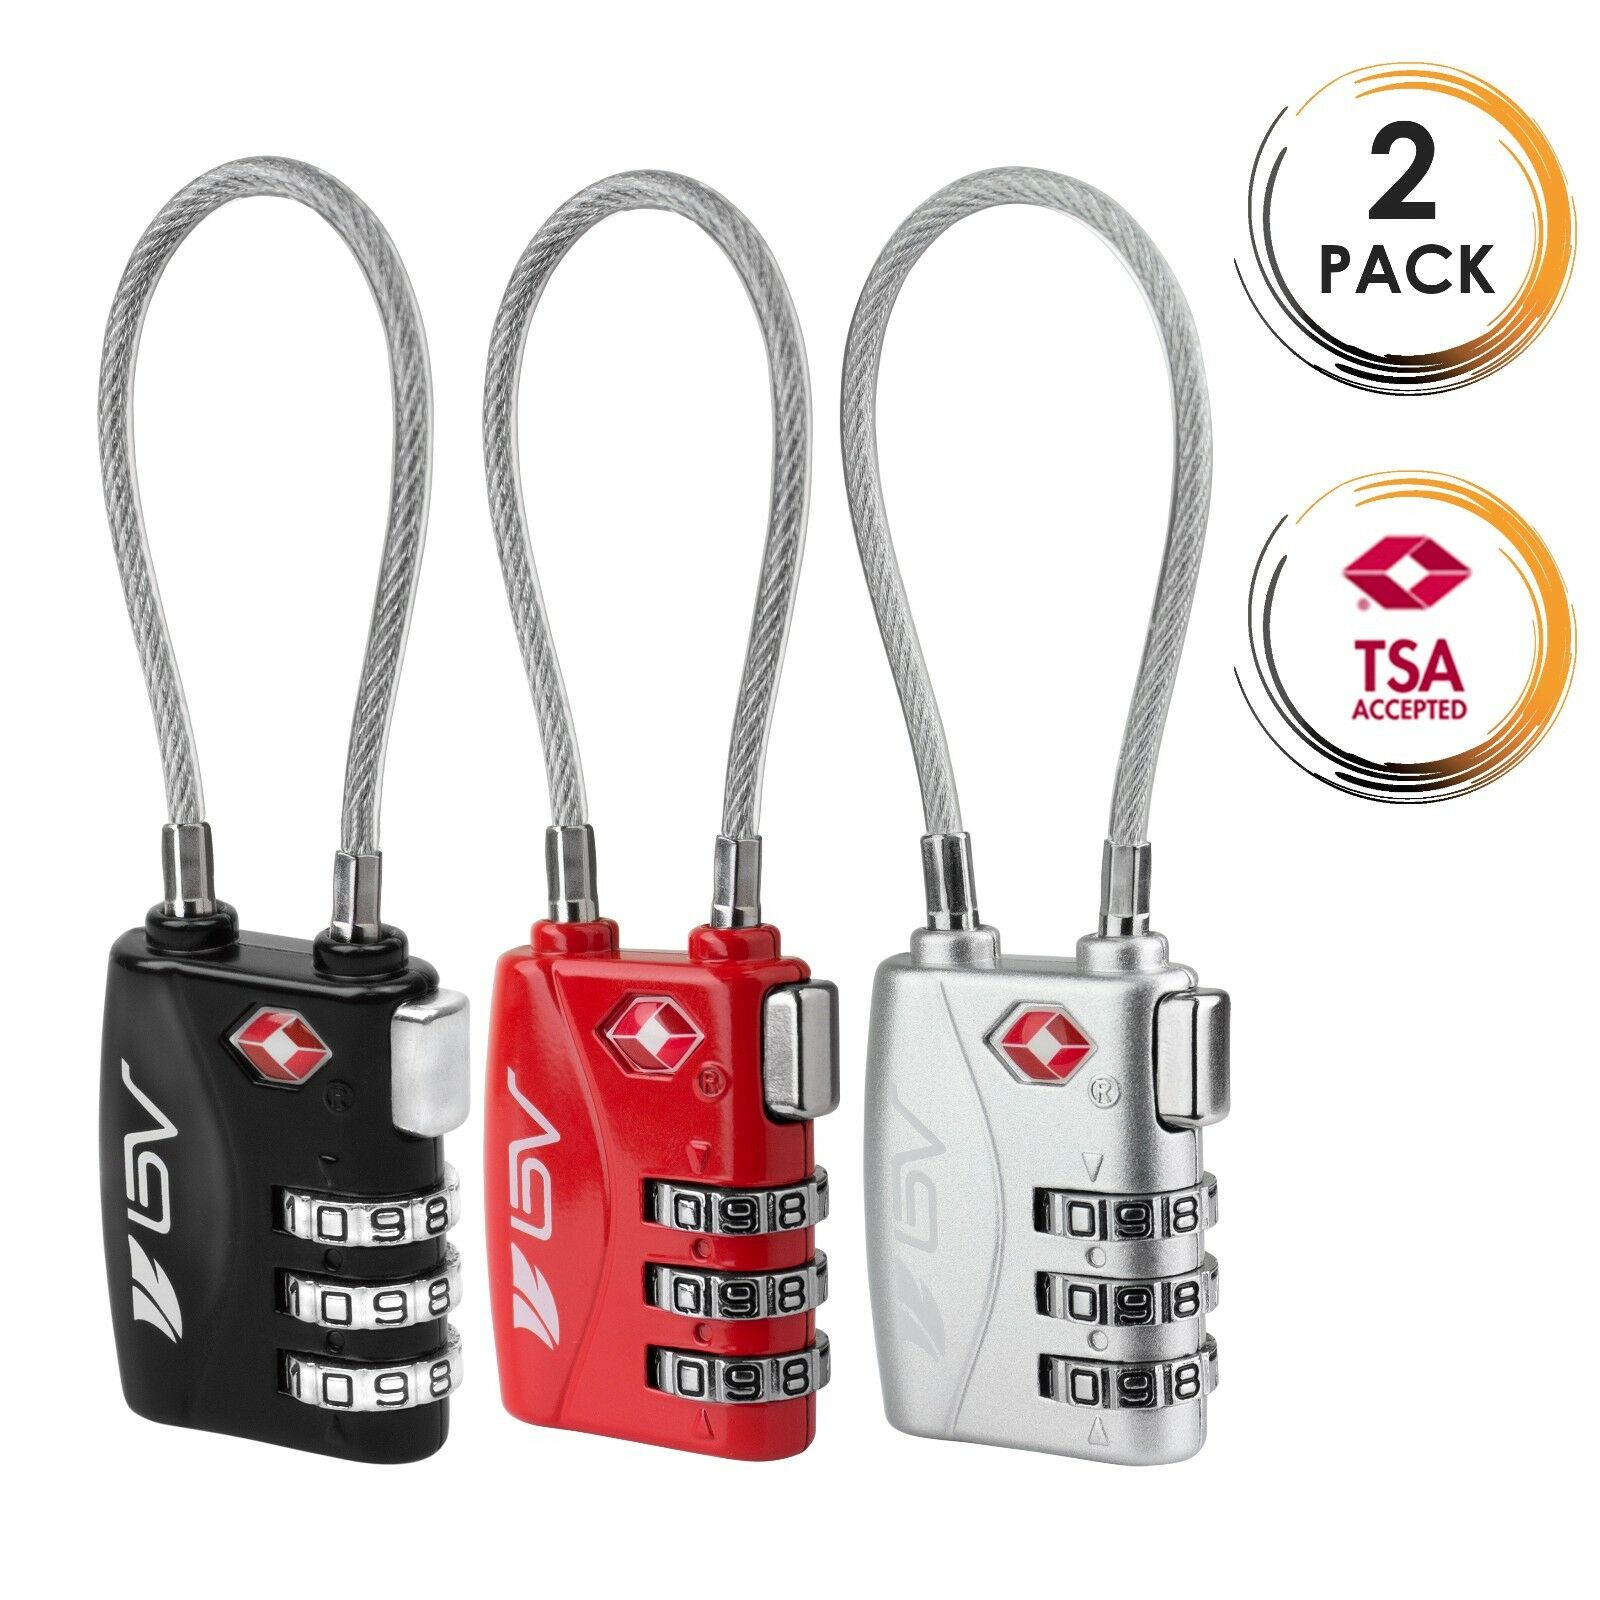 Bv Tsa Travel Luggage Lock Security Lock 3 Digit Set-your-own Combination Lock